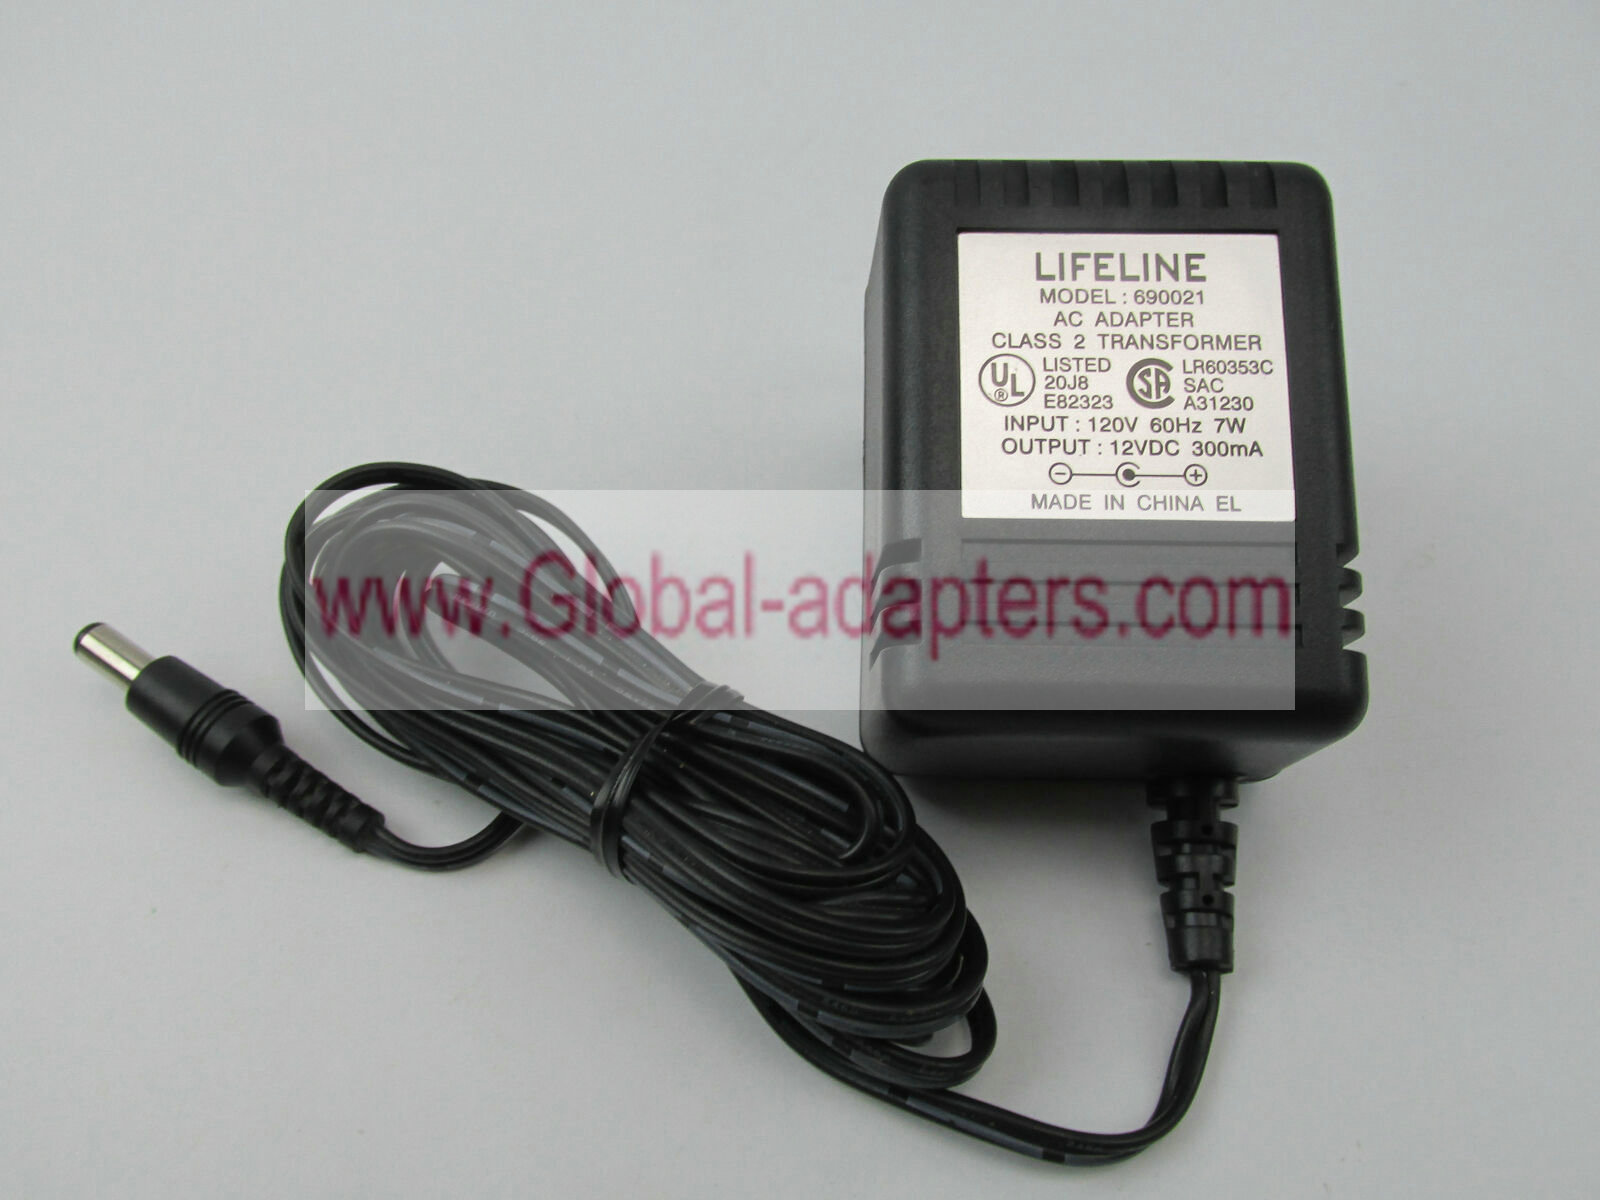 NEW 12VDC 300mA Lifeline 690021 AC Adapter 12VDC Class 2 Transformer Power Supply Cord